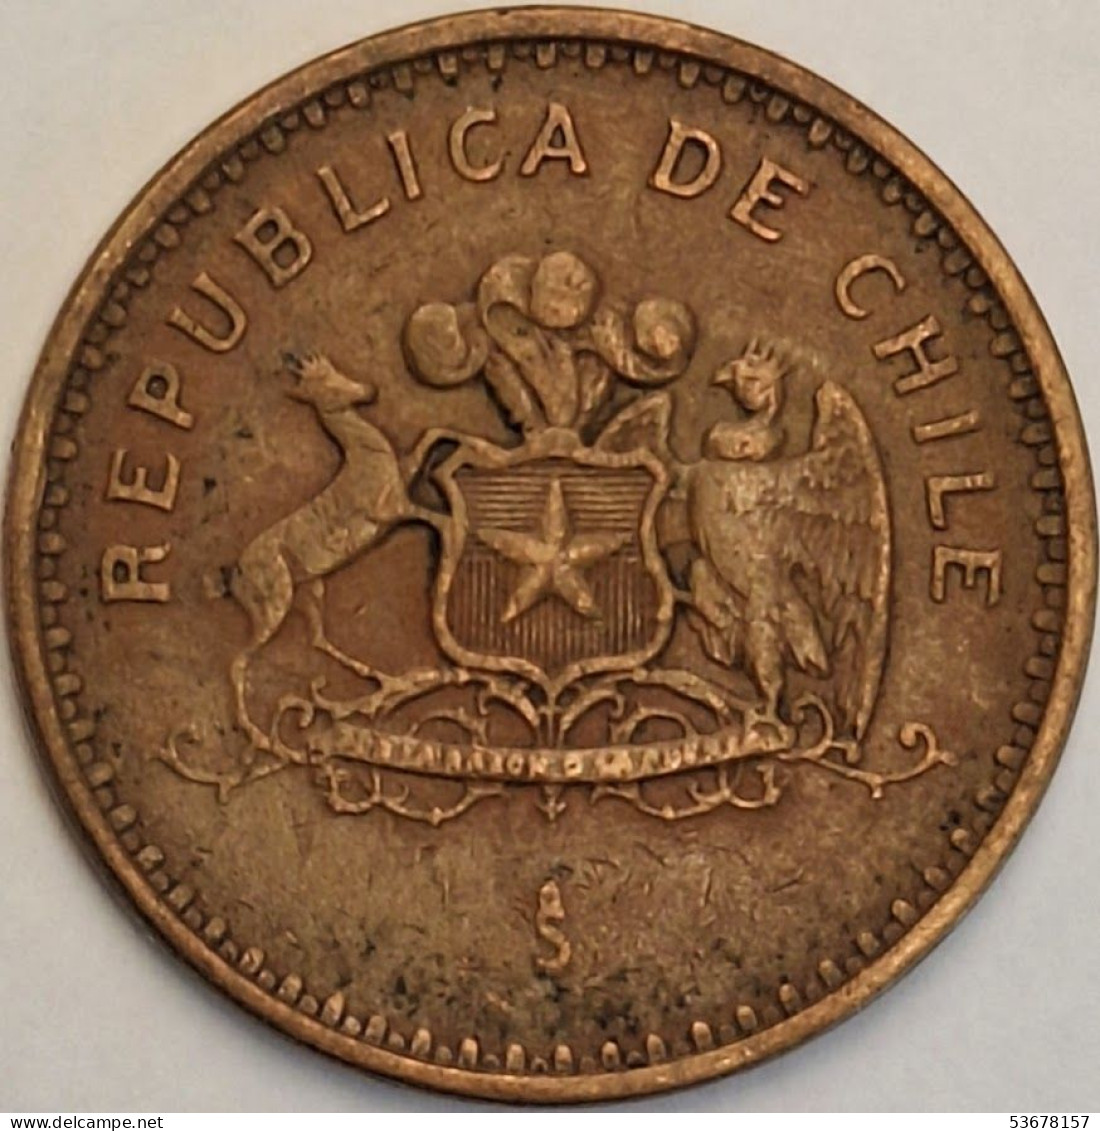 Chile - 100 Pesos 1987, KM# 226.1 (#3453) - Chili